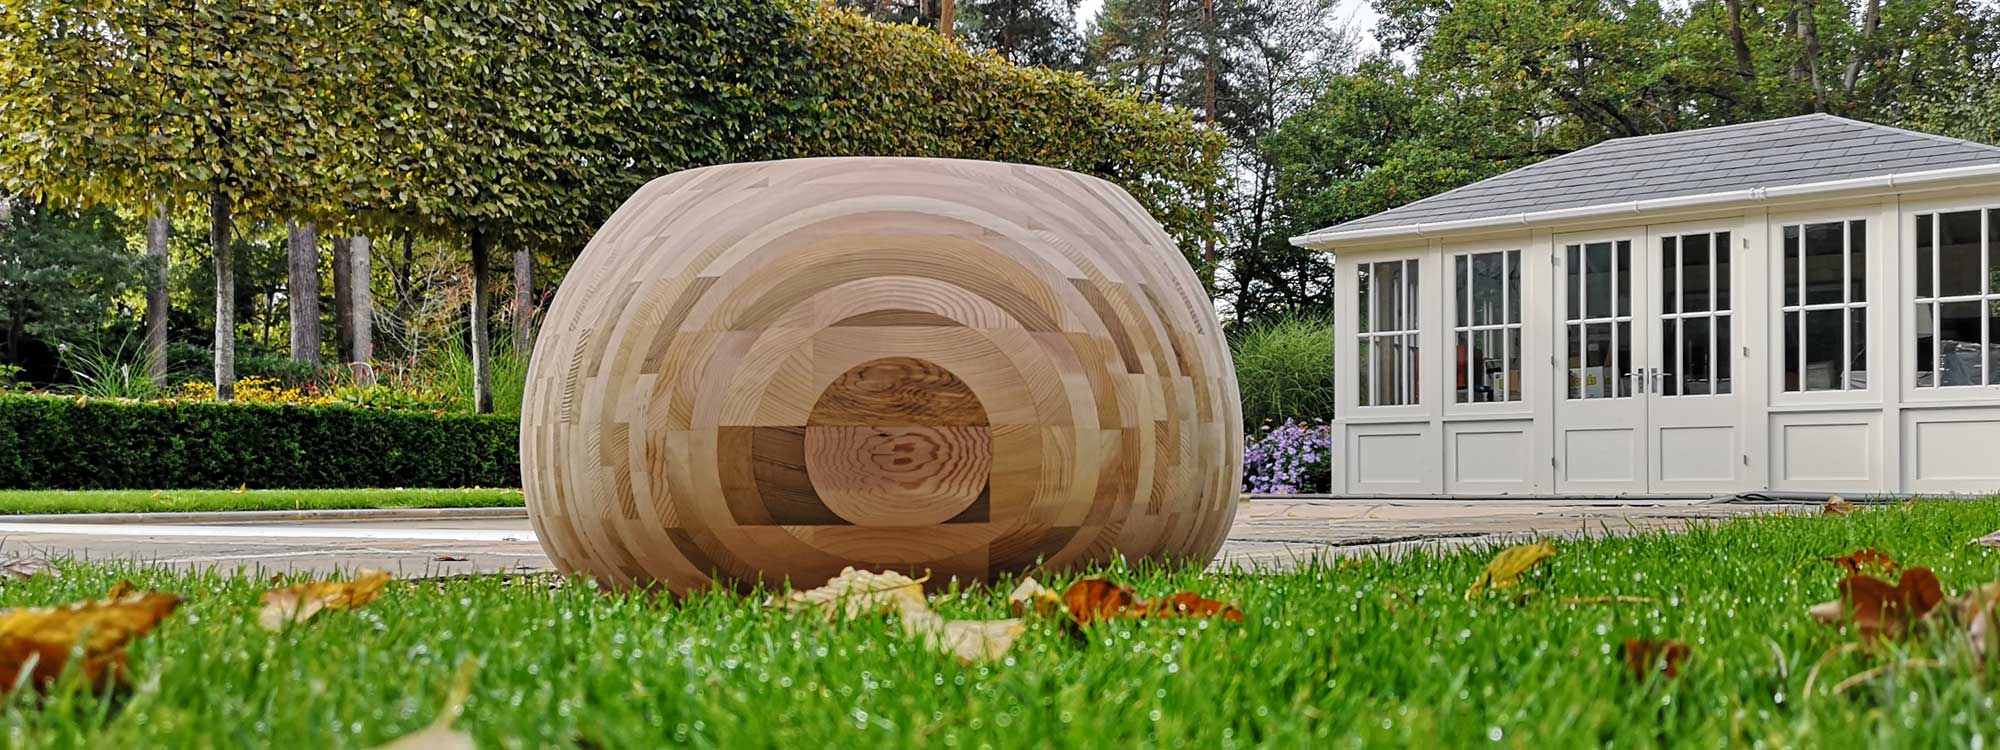 WEYBRIDGE Garden Furniture Install Of Motley Drum MODERN Garden Furniture POUF, Solid Wood Pouf/ CONTEMPORARY Outdoor STOOL By WS LUXURY Garden FURNITURE.